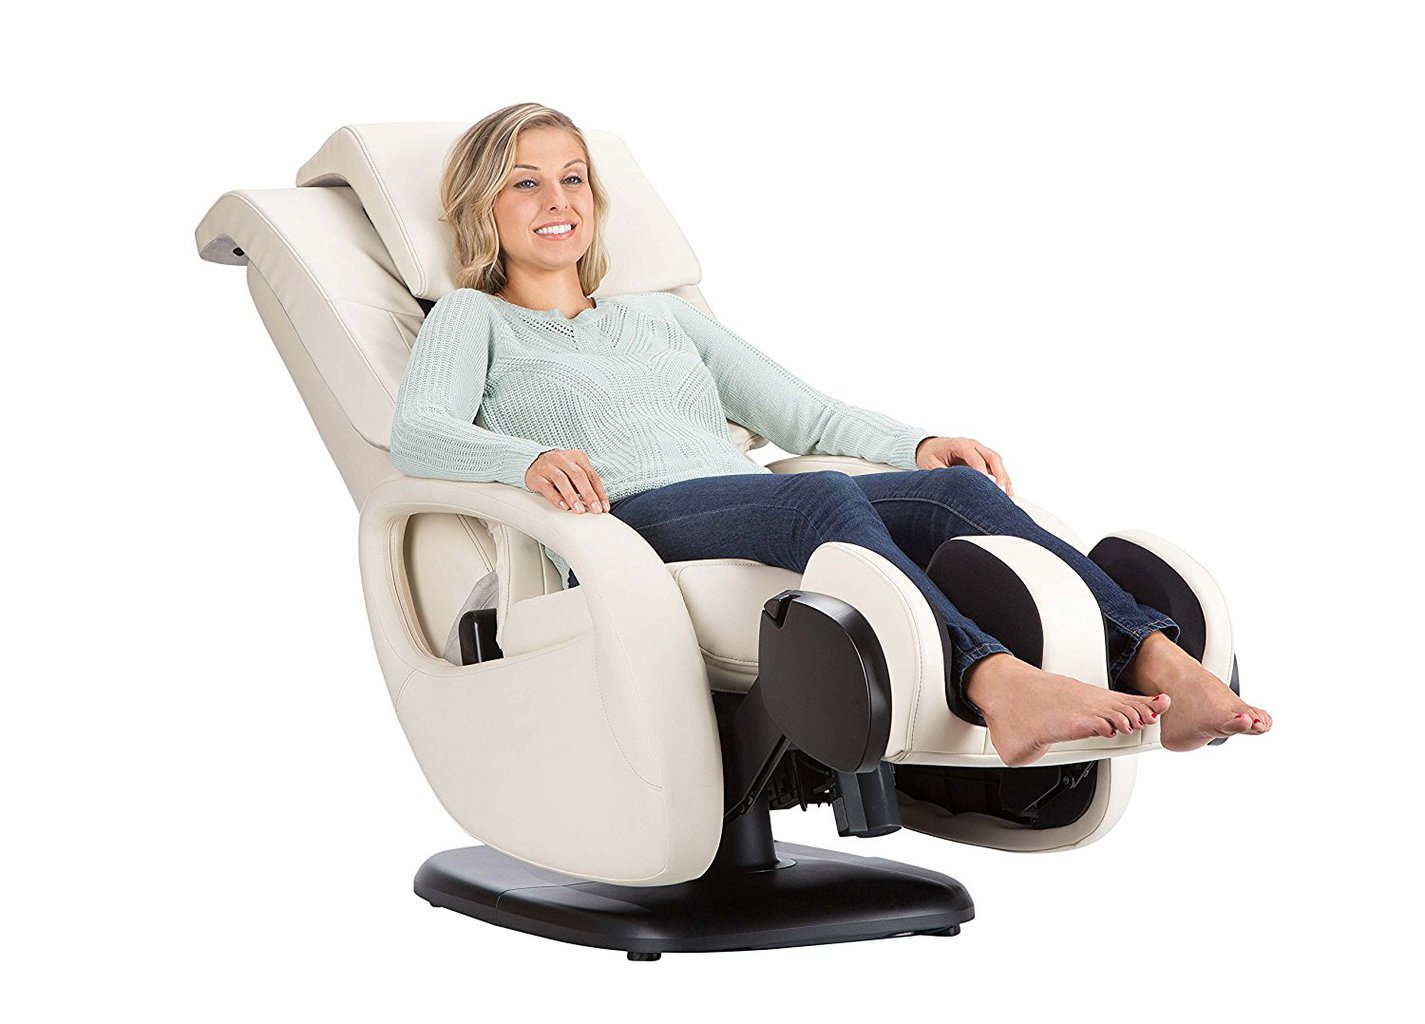 Top 3 Best HUMAN TOUCH Massage Chairs (Cheap \u0026 Best) Review 2020